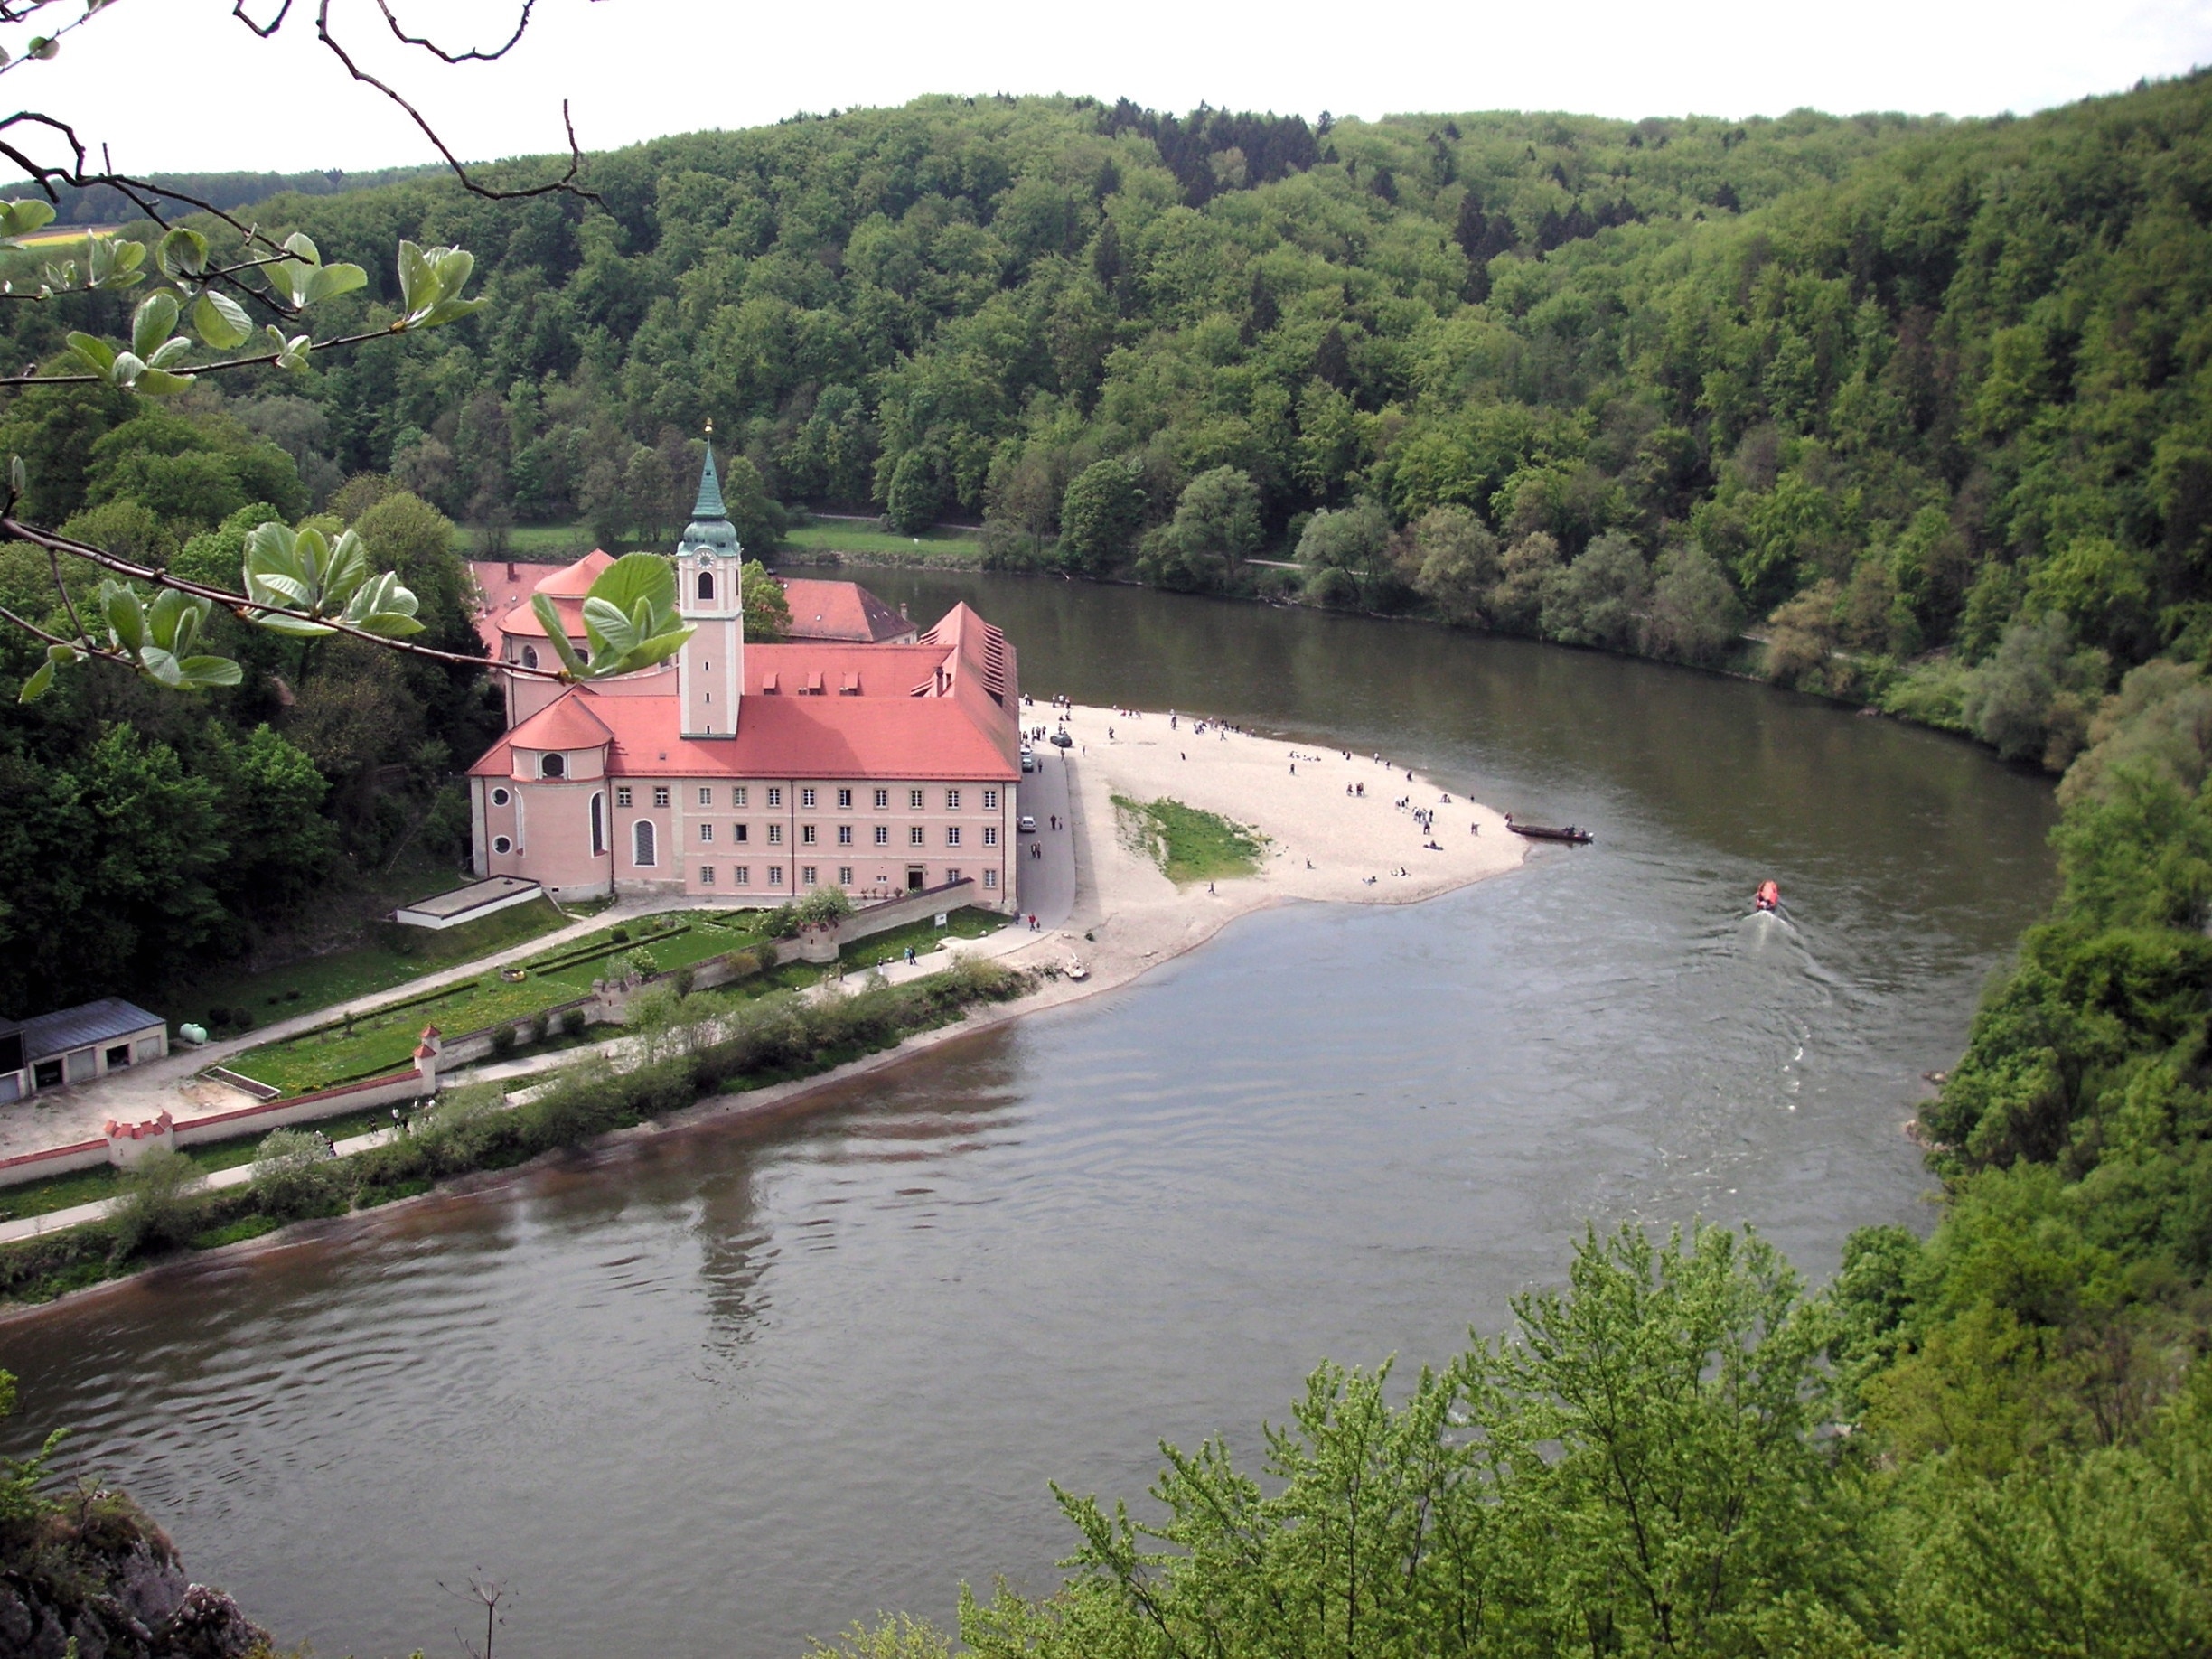 Danube Gorge, Kelheim, Bavaria, Germany